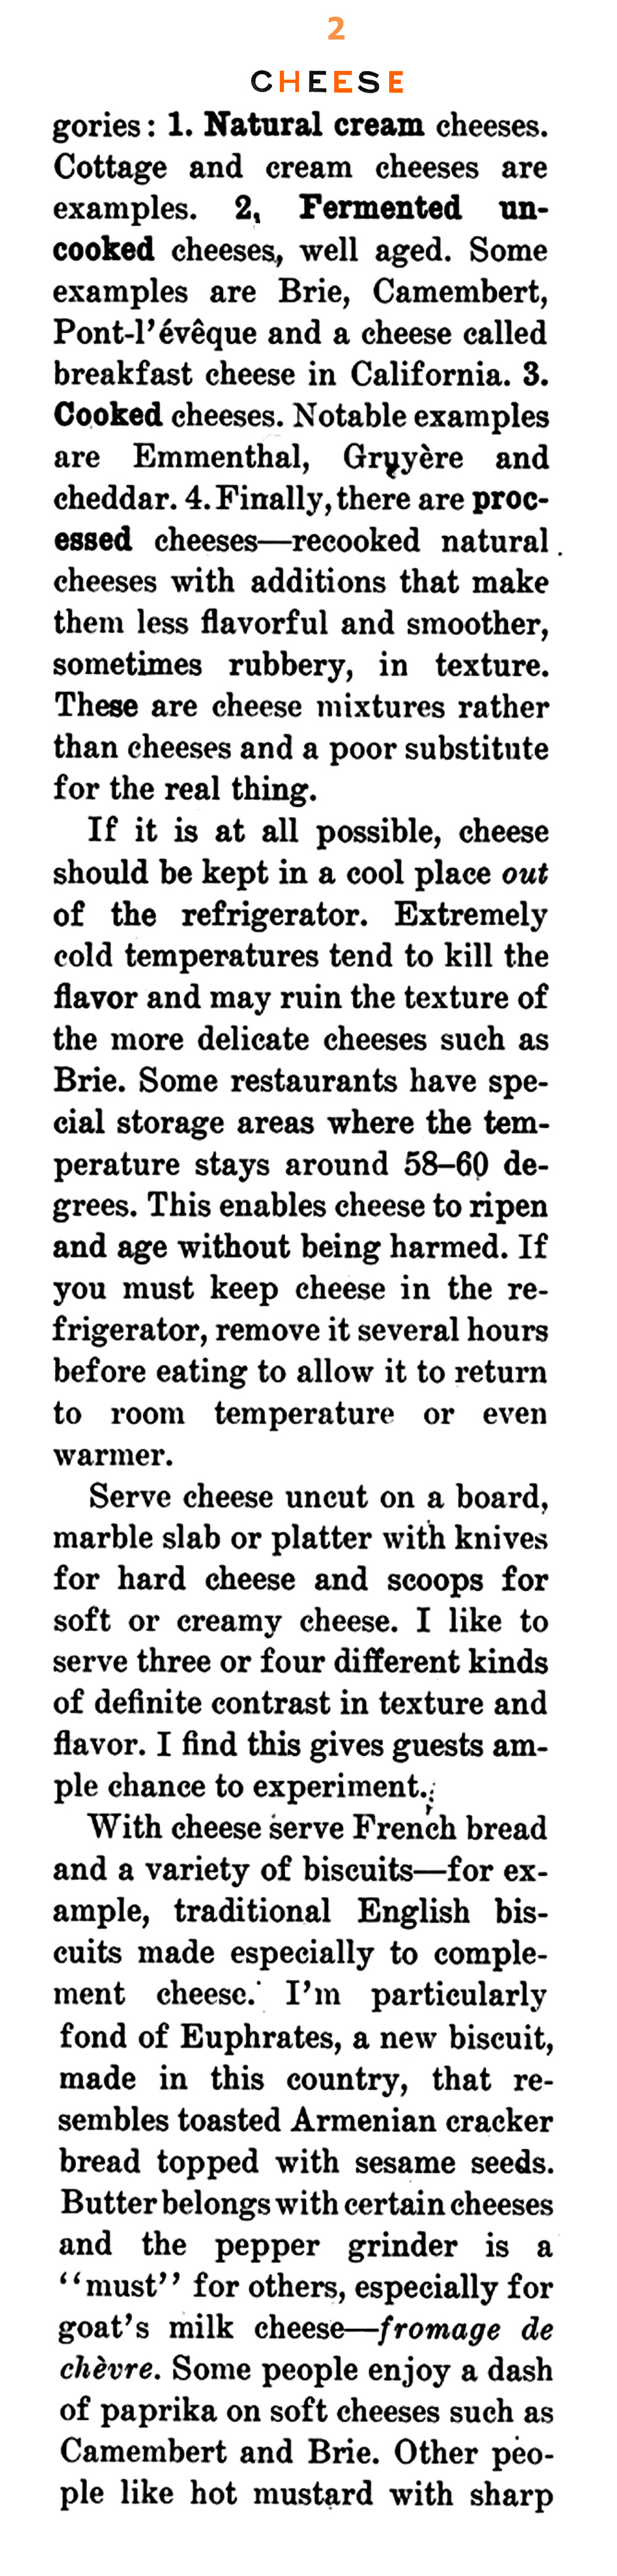 James Beard on Cheese (Gentry Magazine, 1957)